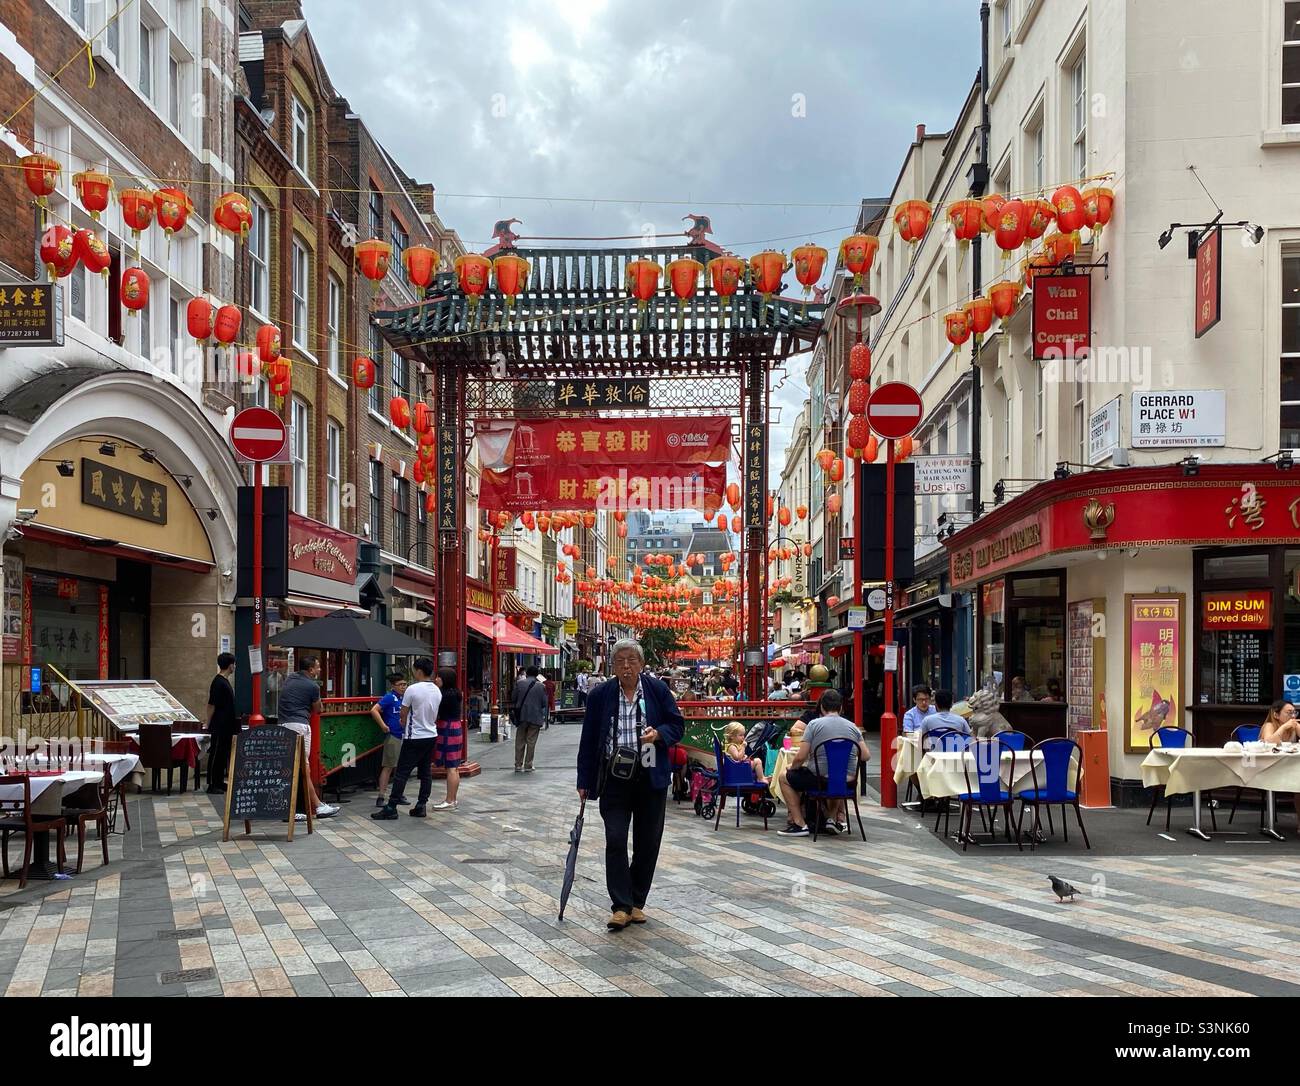 Chinatown Soho- people walking and dining al fresco Stock Photo